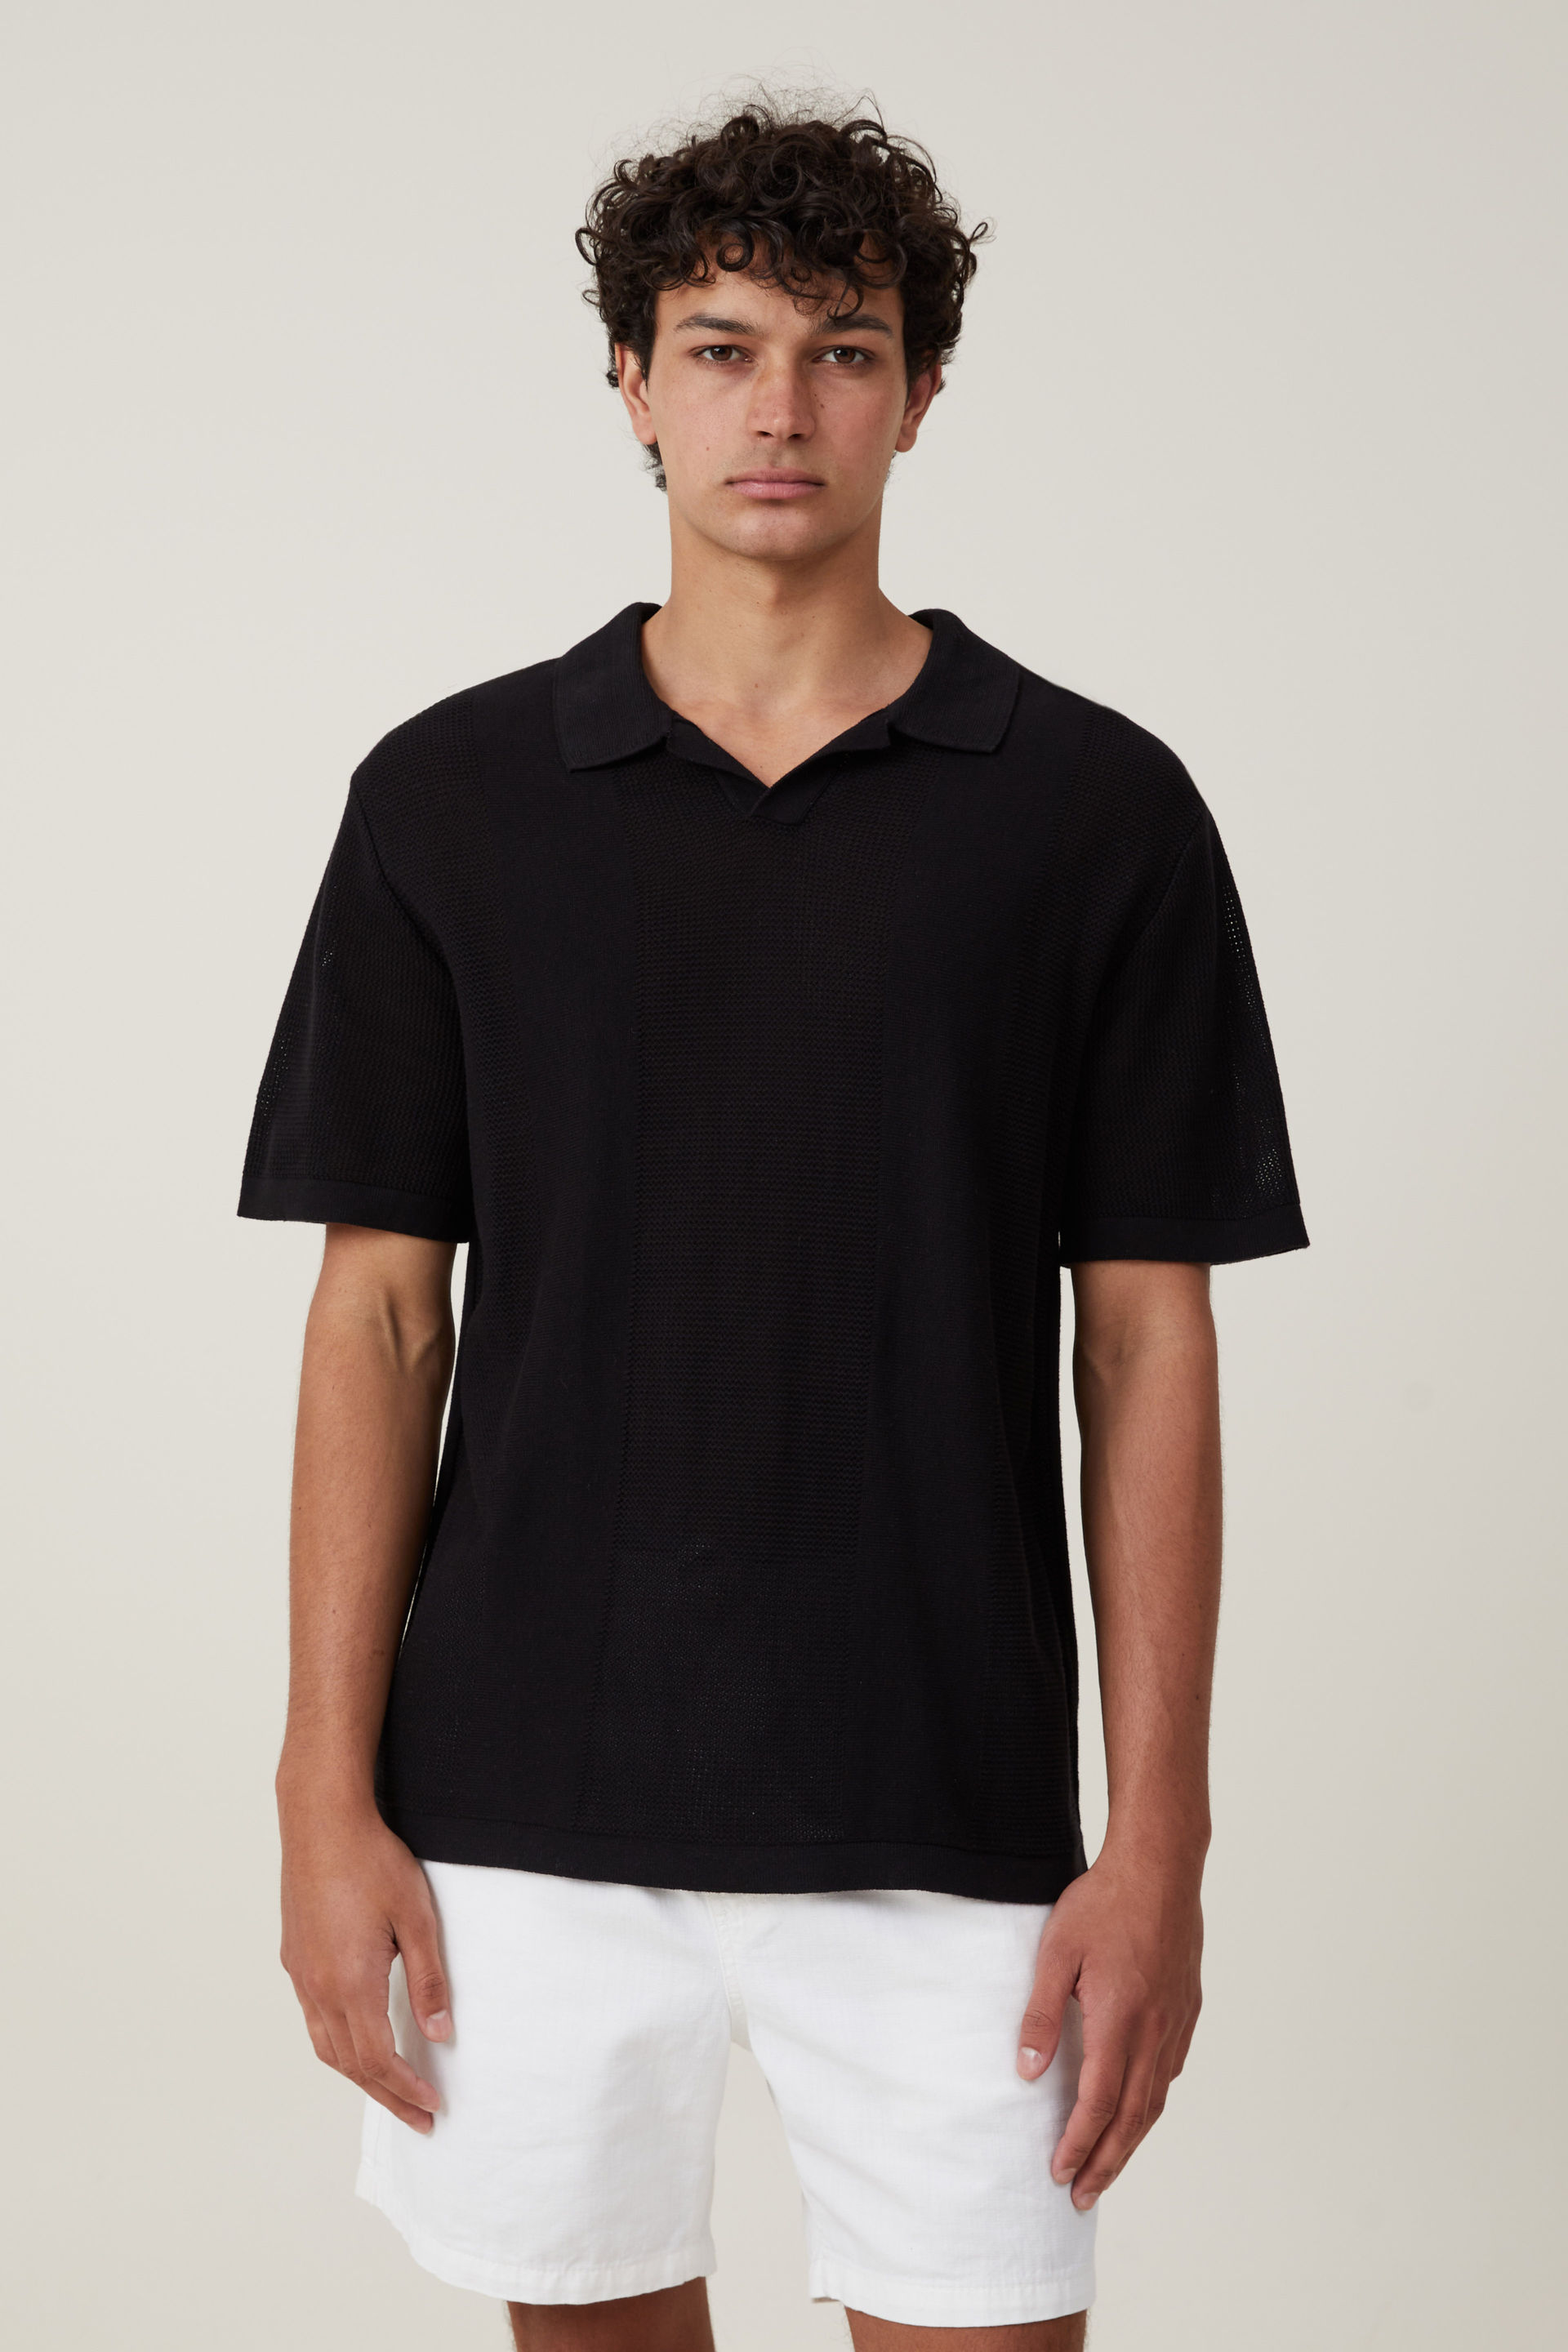 Cotton On Men - Resort Short Sleeve Polo - Black